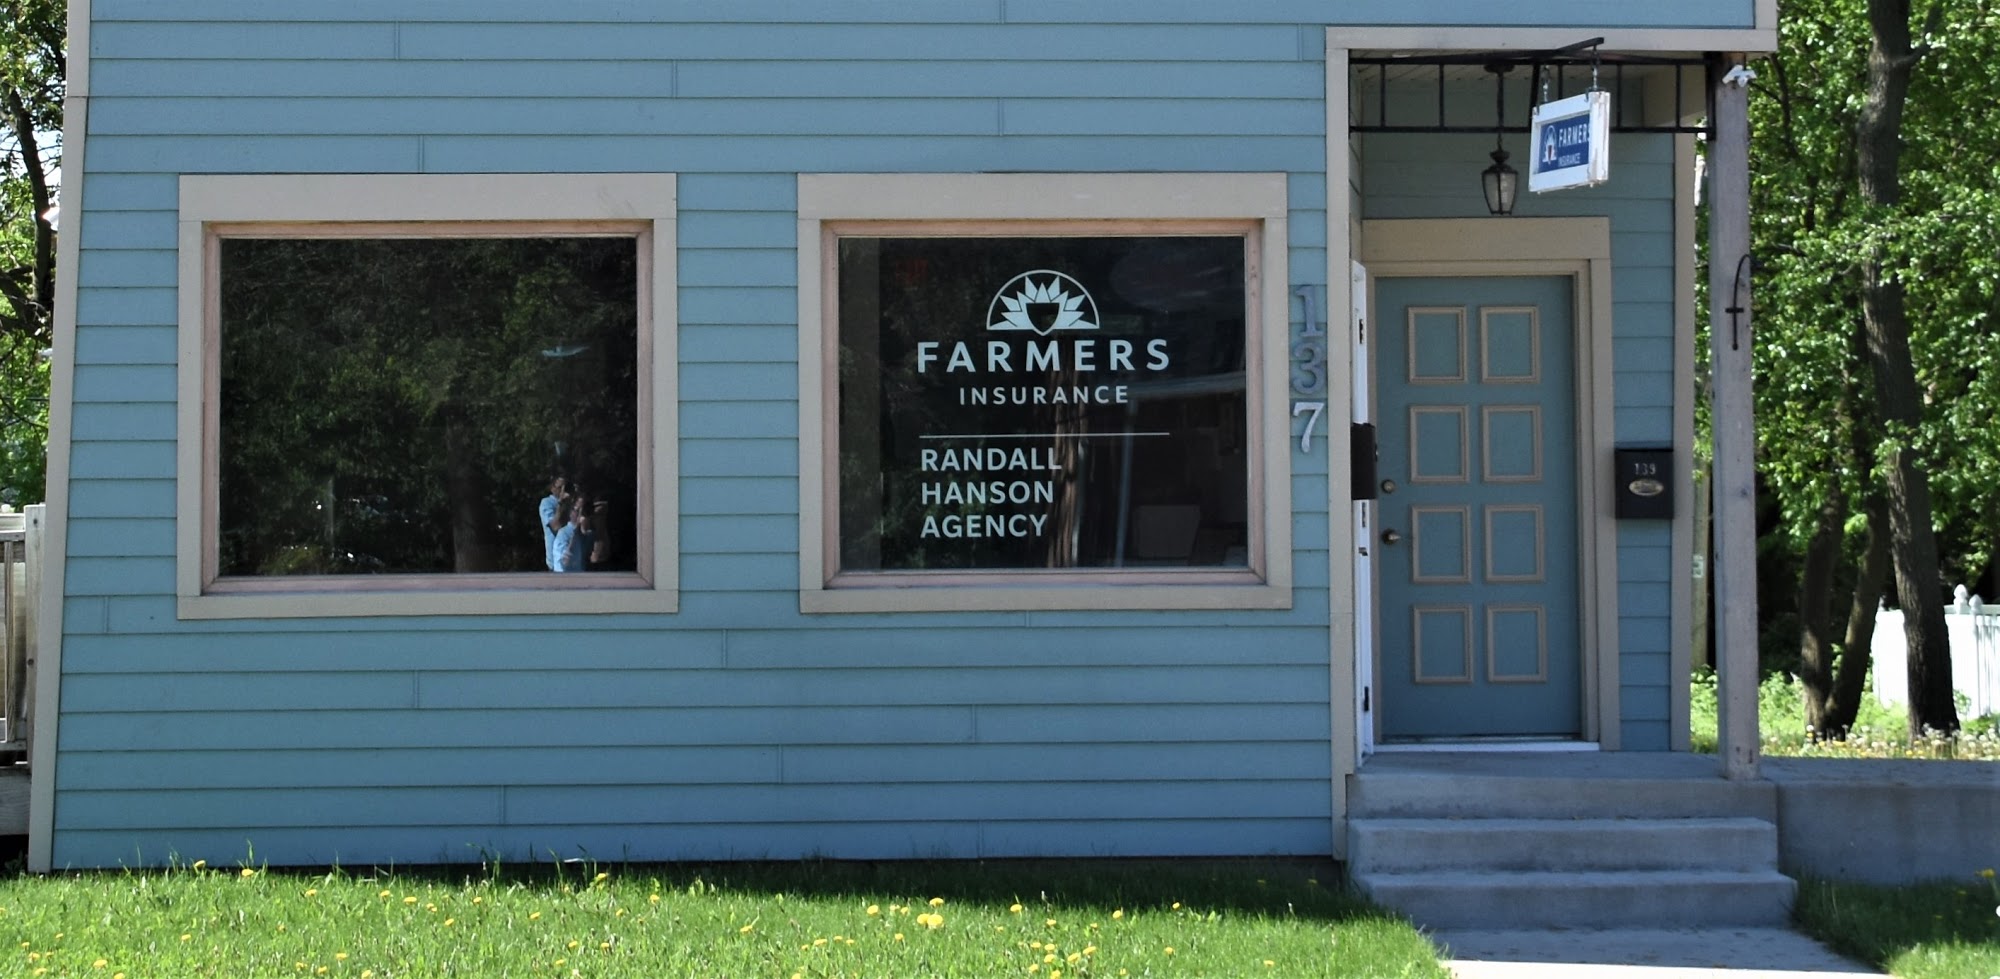 Farmers Insurance - Randall Hanson